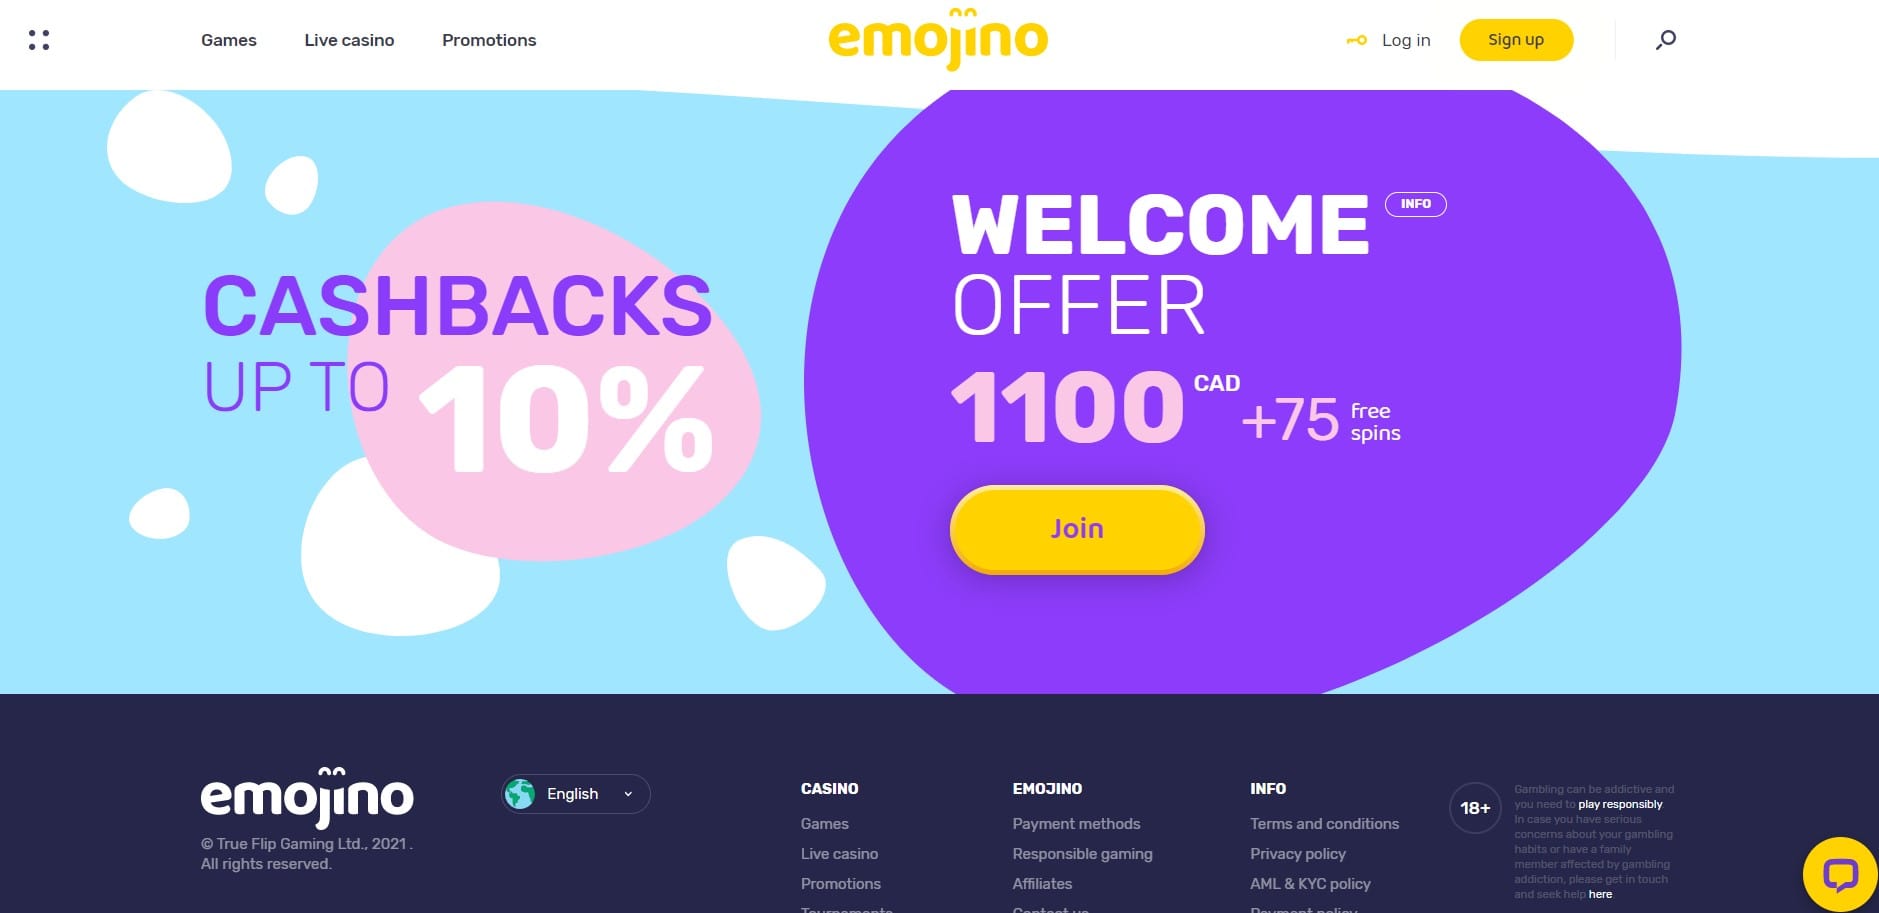 Emojino Casino Welcome Offer